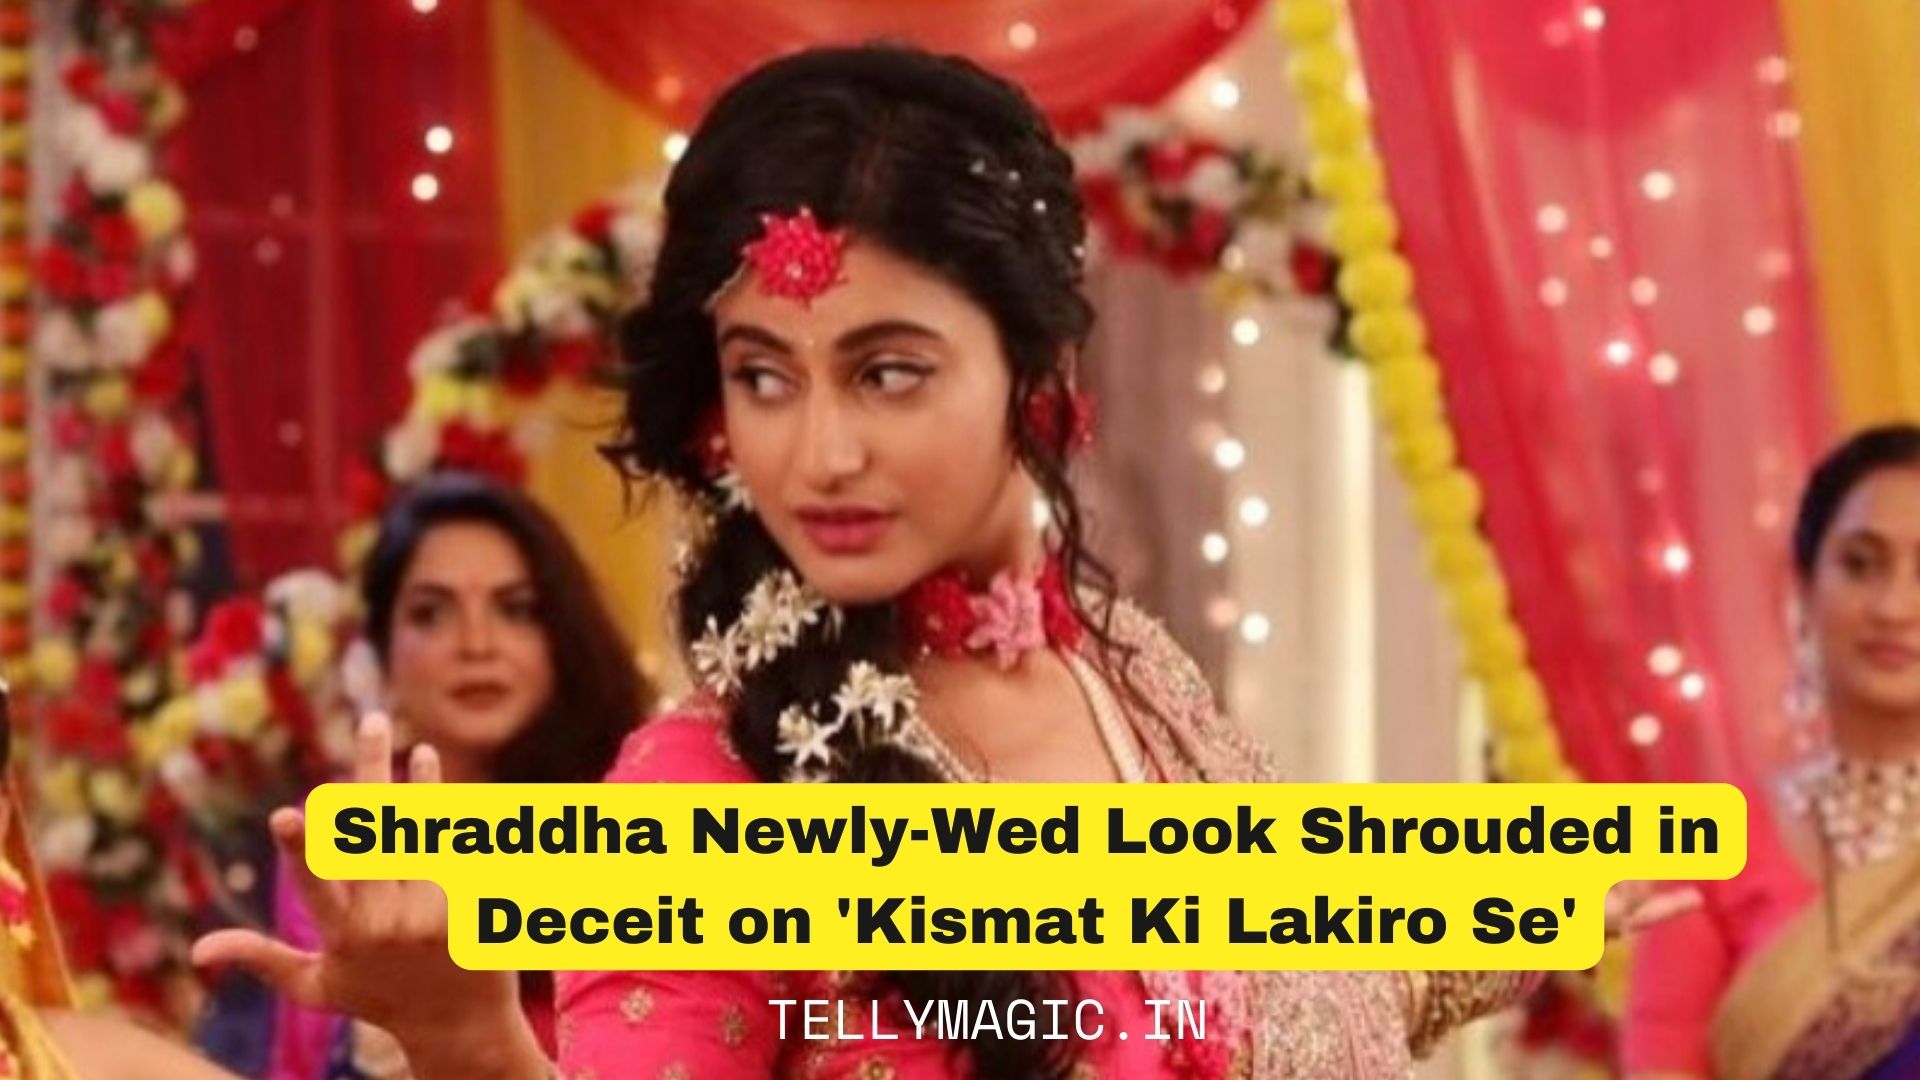 Shraddha Newly-Wed Look Shrouded in Deceit on Kismat Ki Lakiro Se